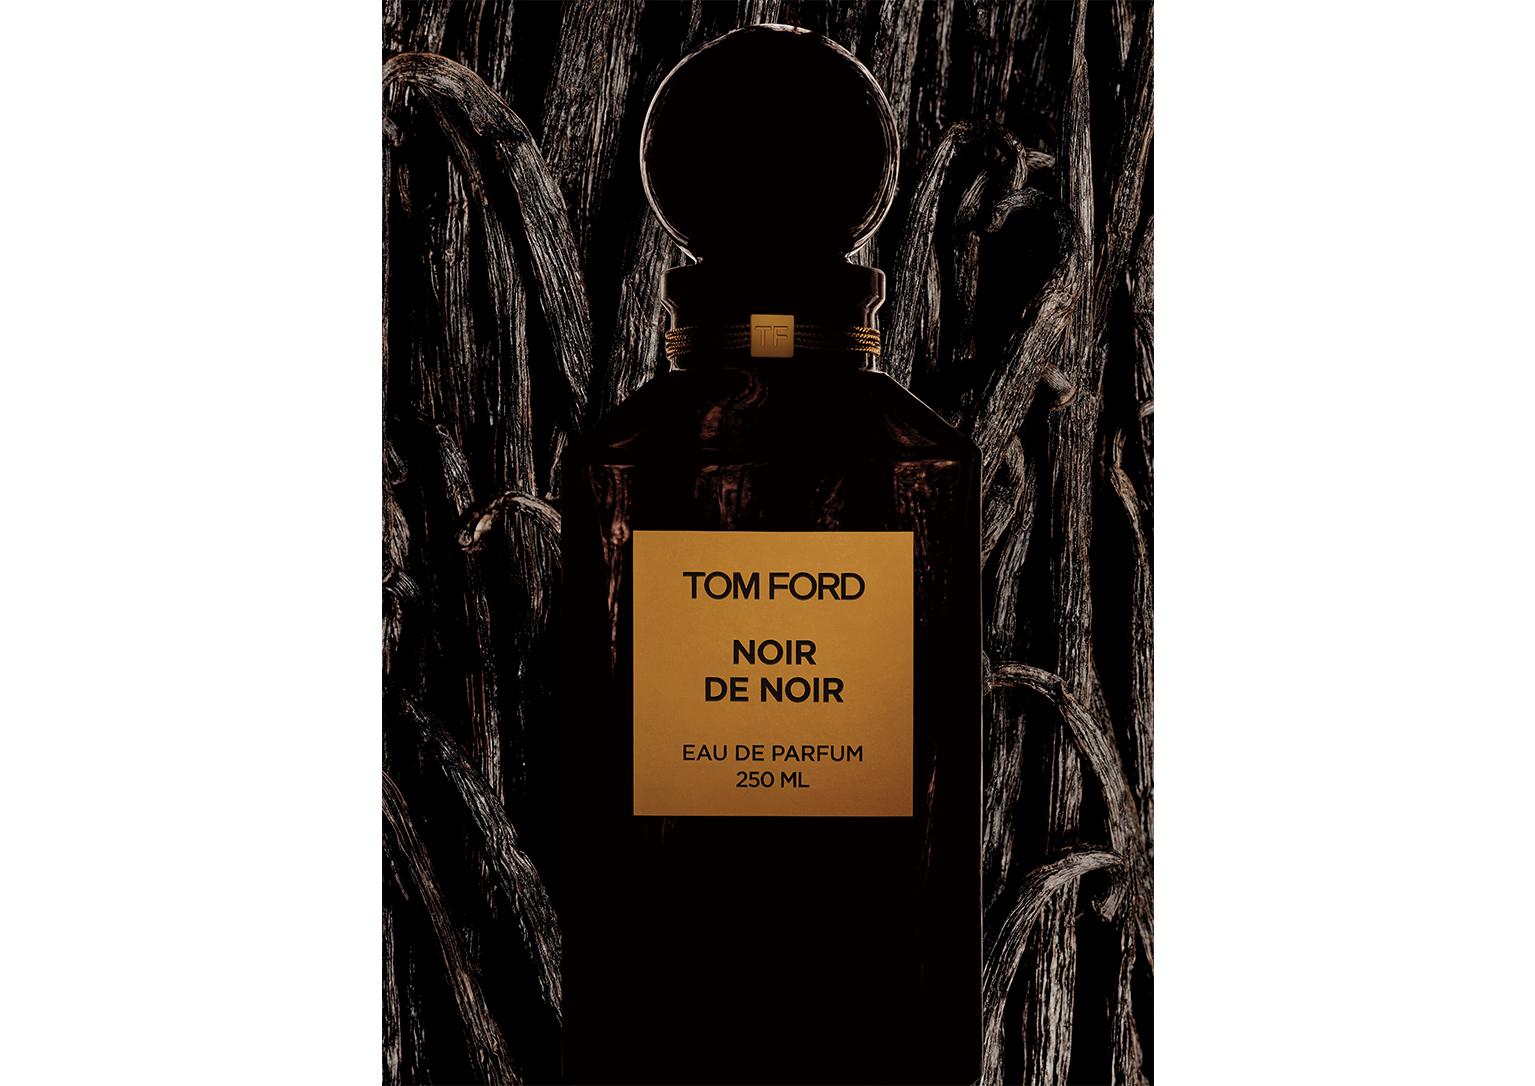 tom ford perfume noir de noir